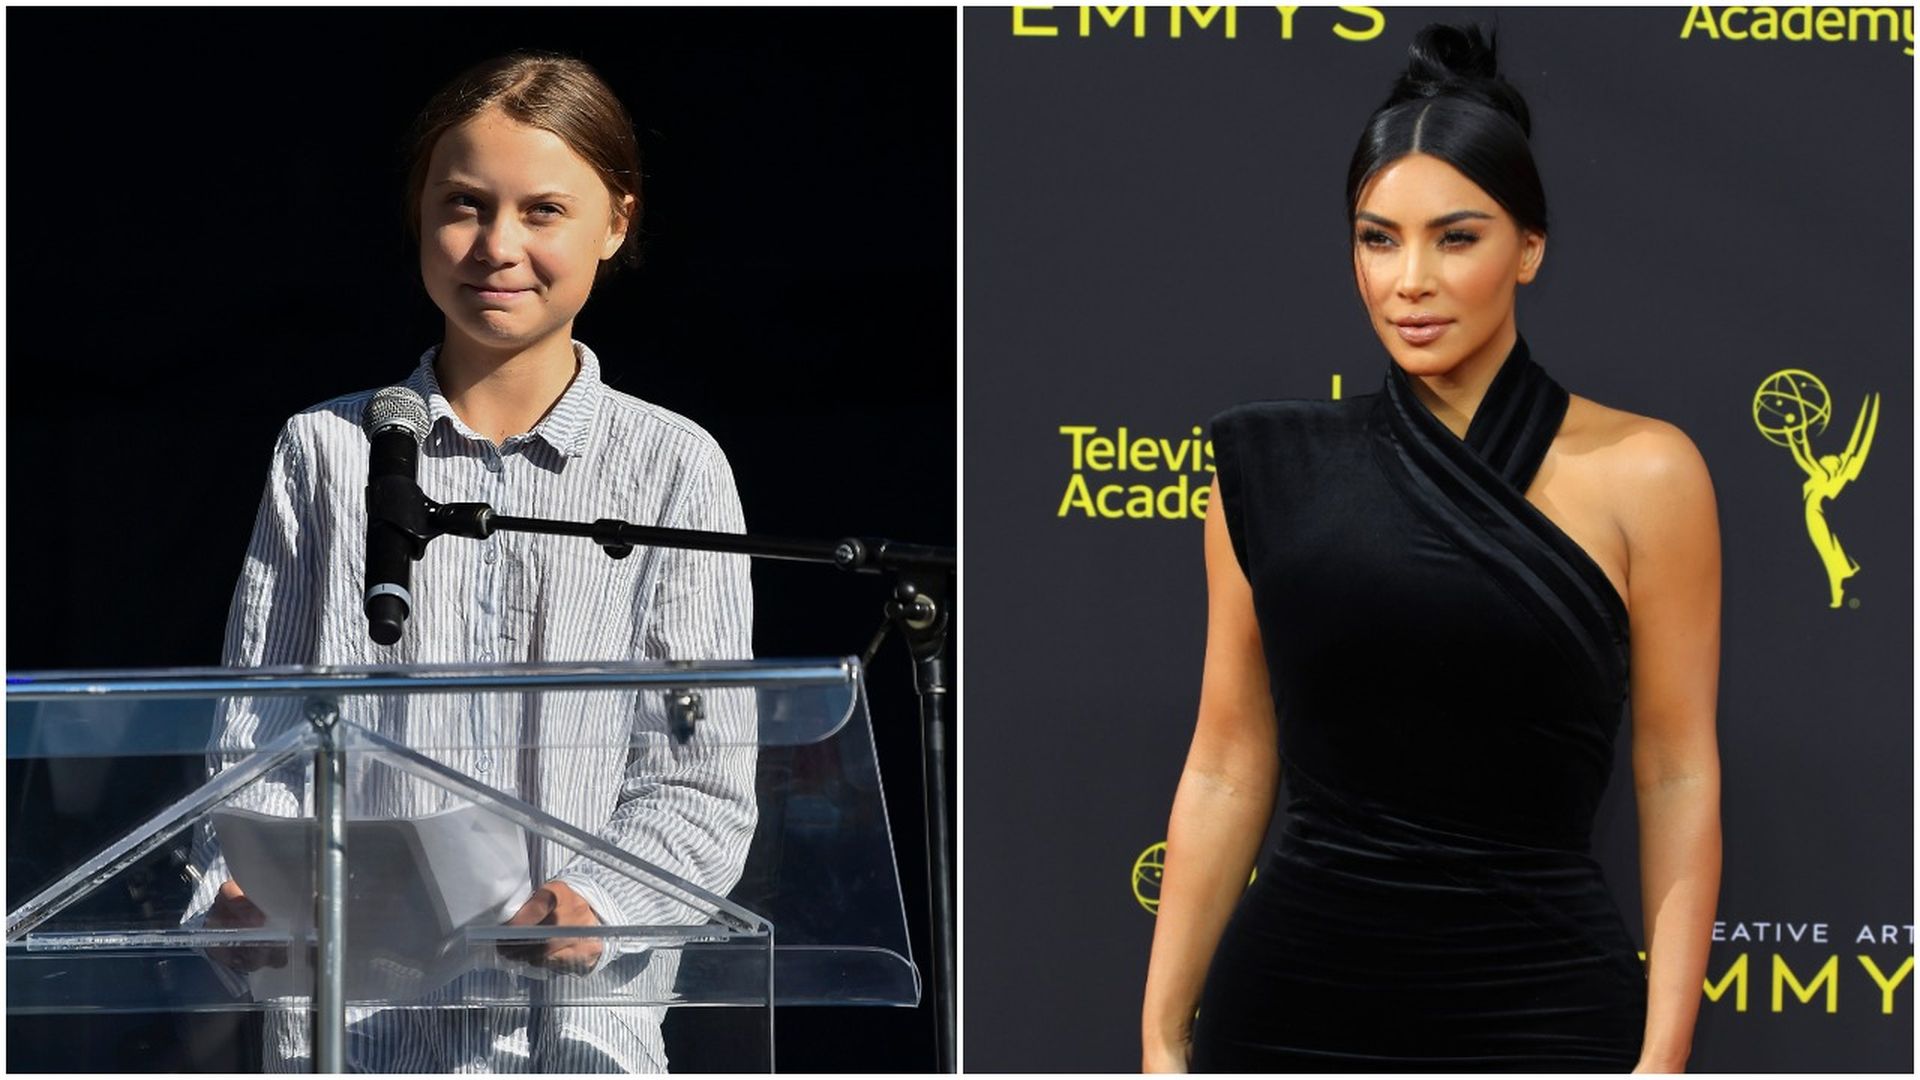 Teen climate activist Greta Thunberg and reality TV star Kim Kardashian